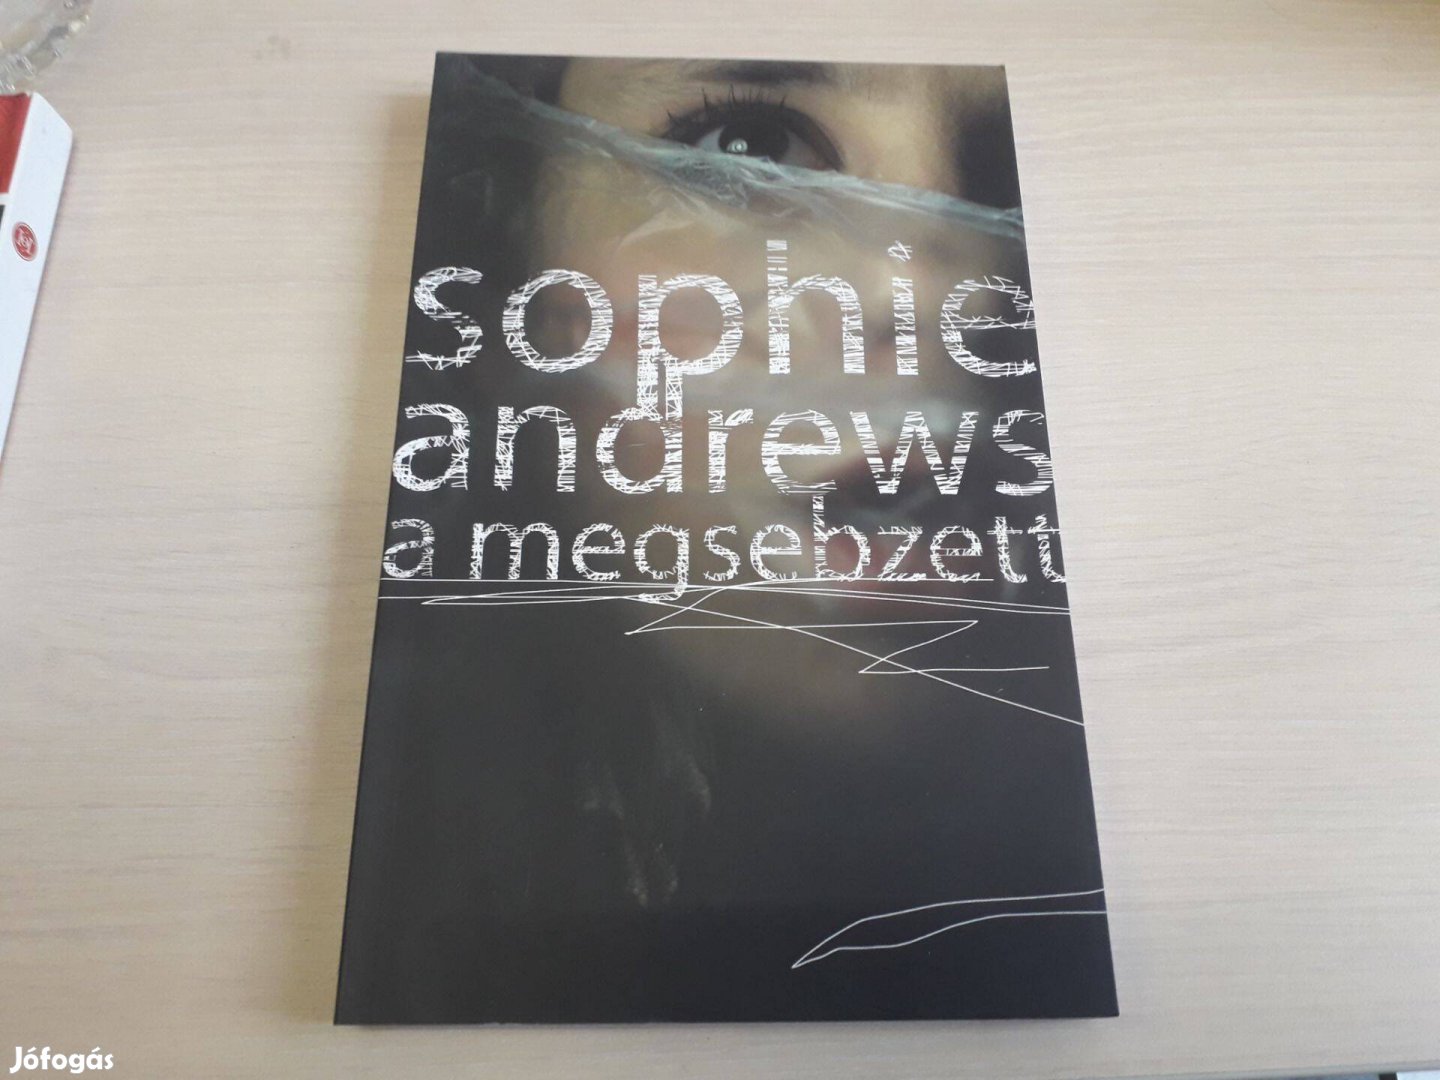 Sophie Andrews - A megsebzett